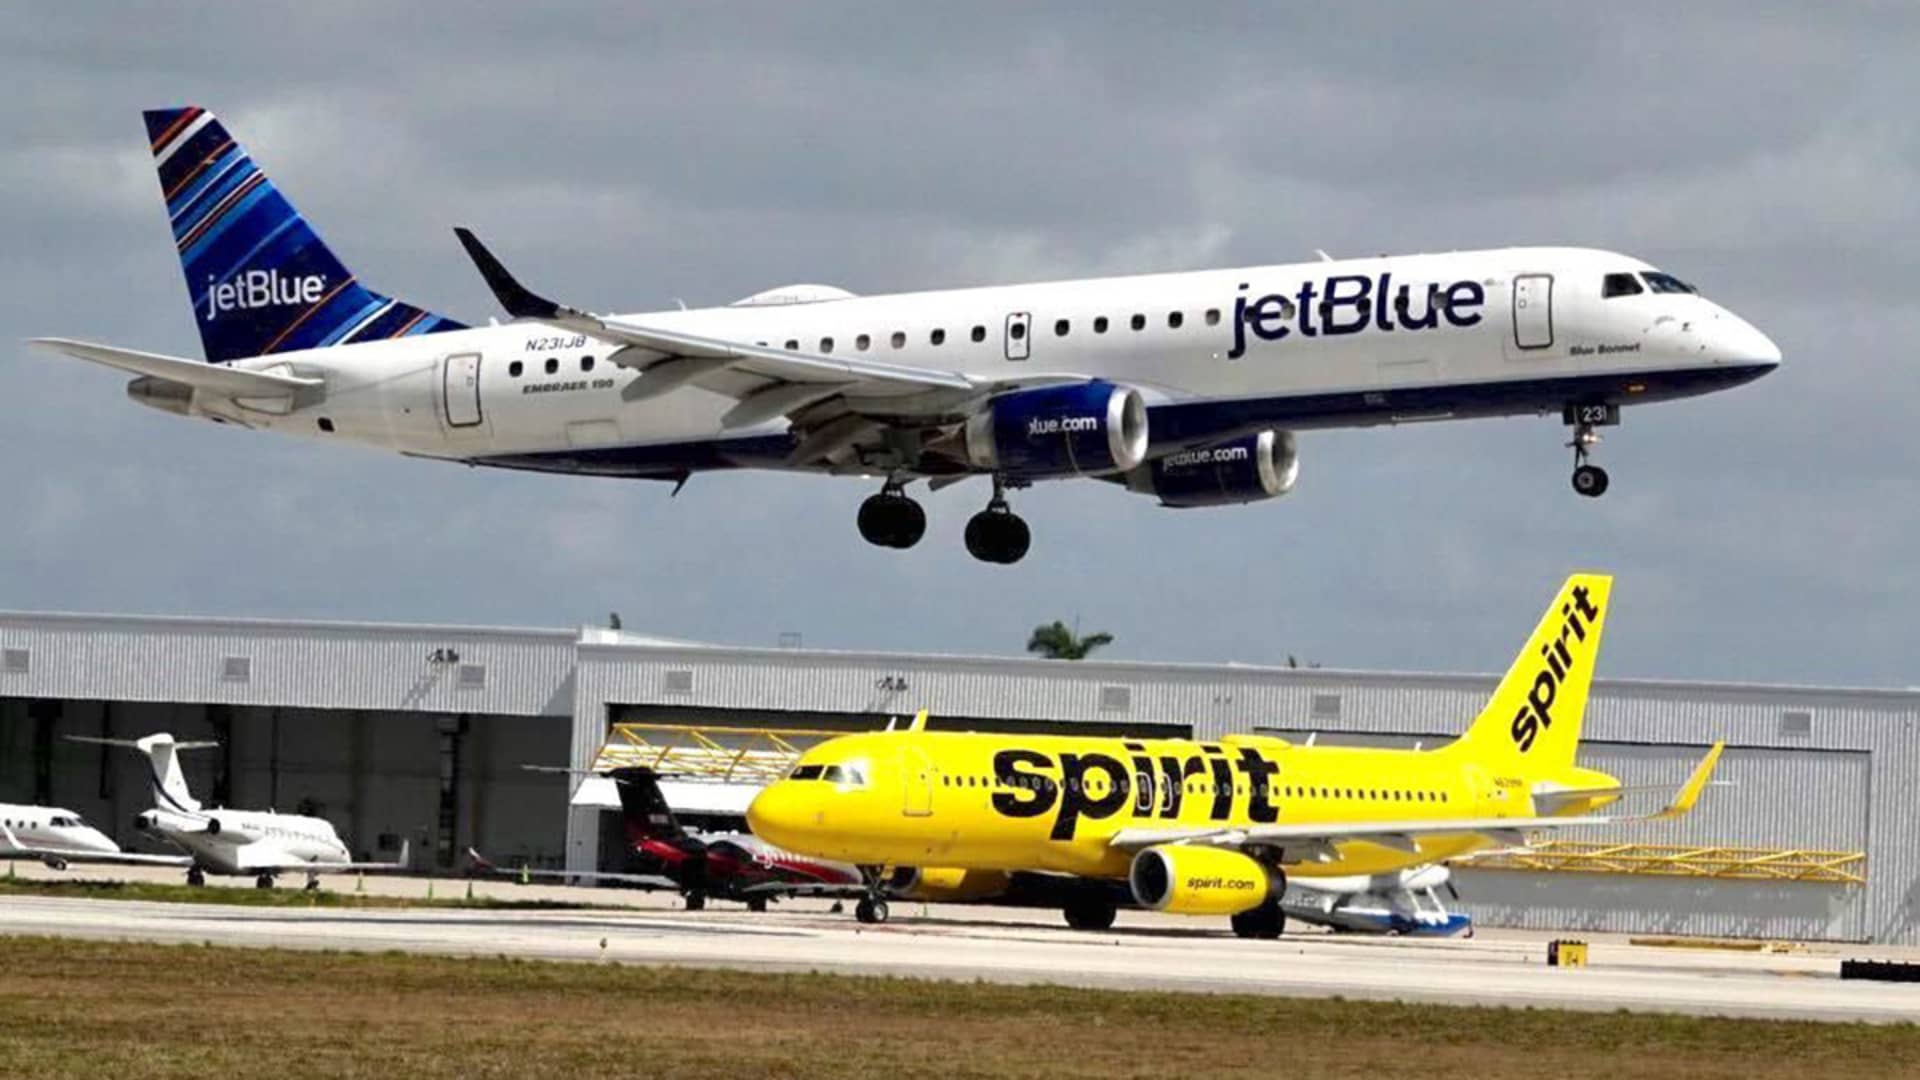 American JetBlue will acquire Spirit Airlines for $3.8 billion